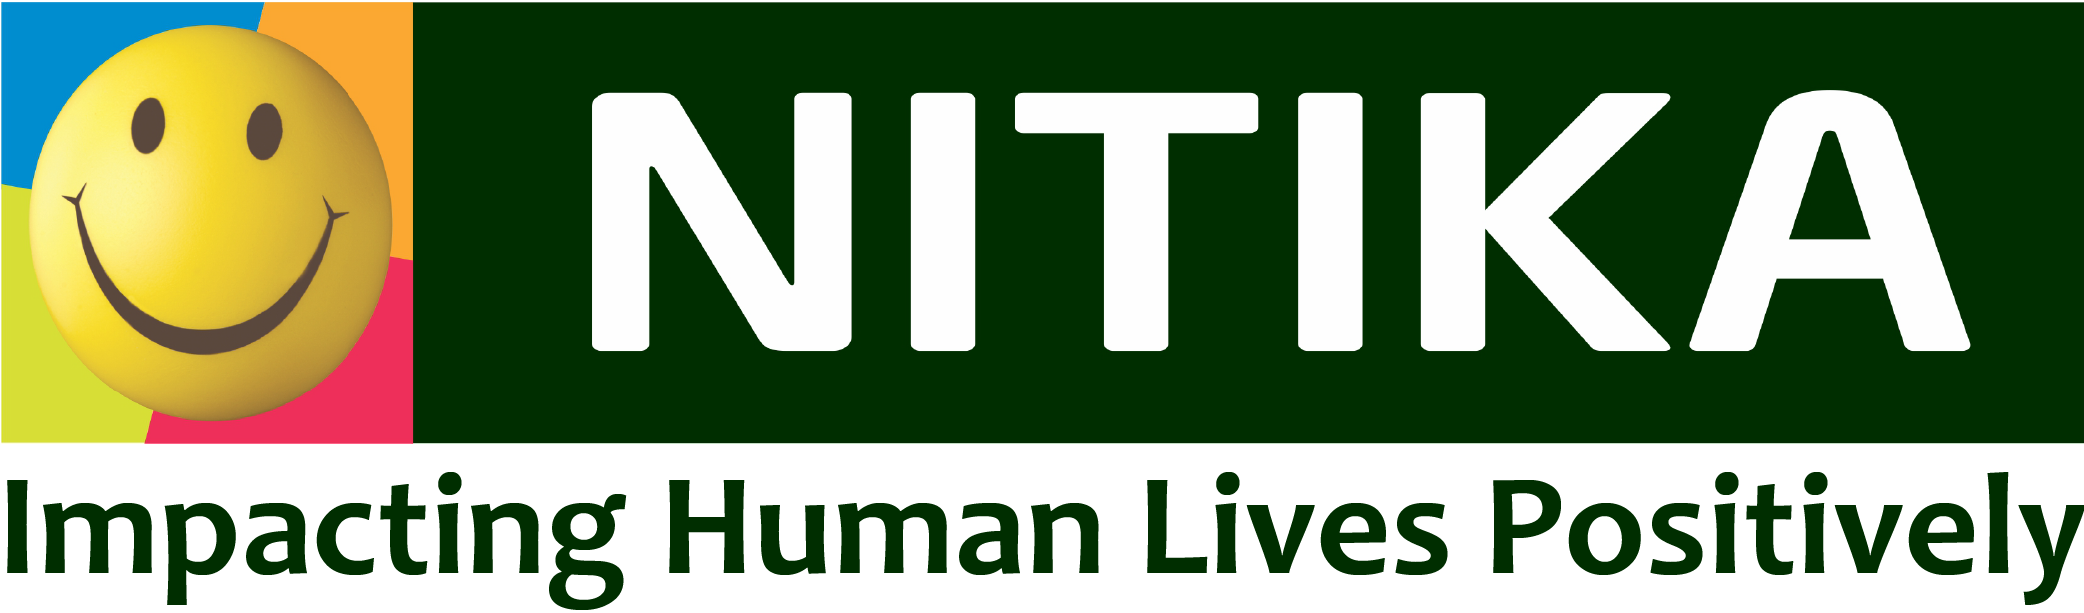 Nitika Pharmaceutical Specialties Pvt. Ltd.